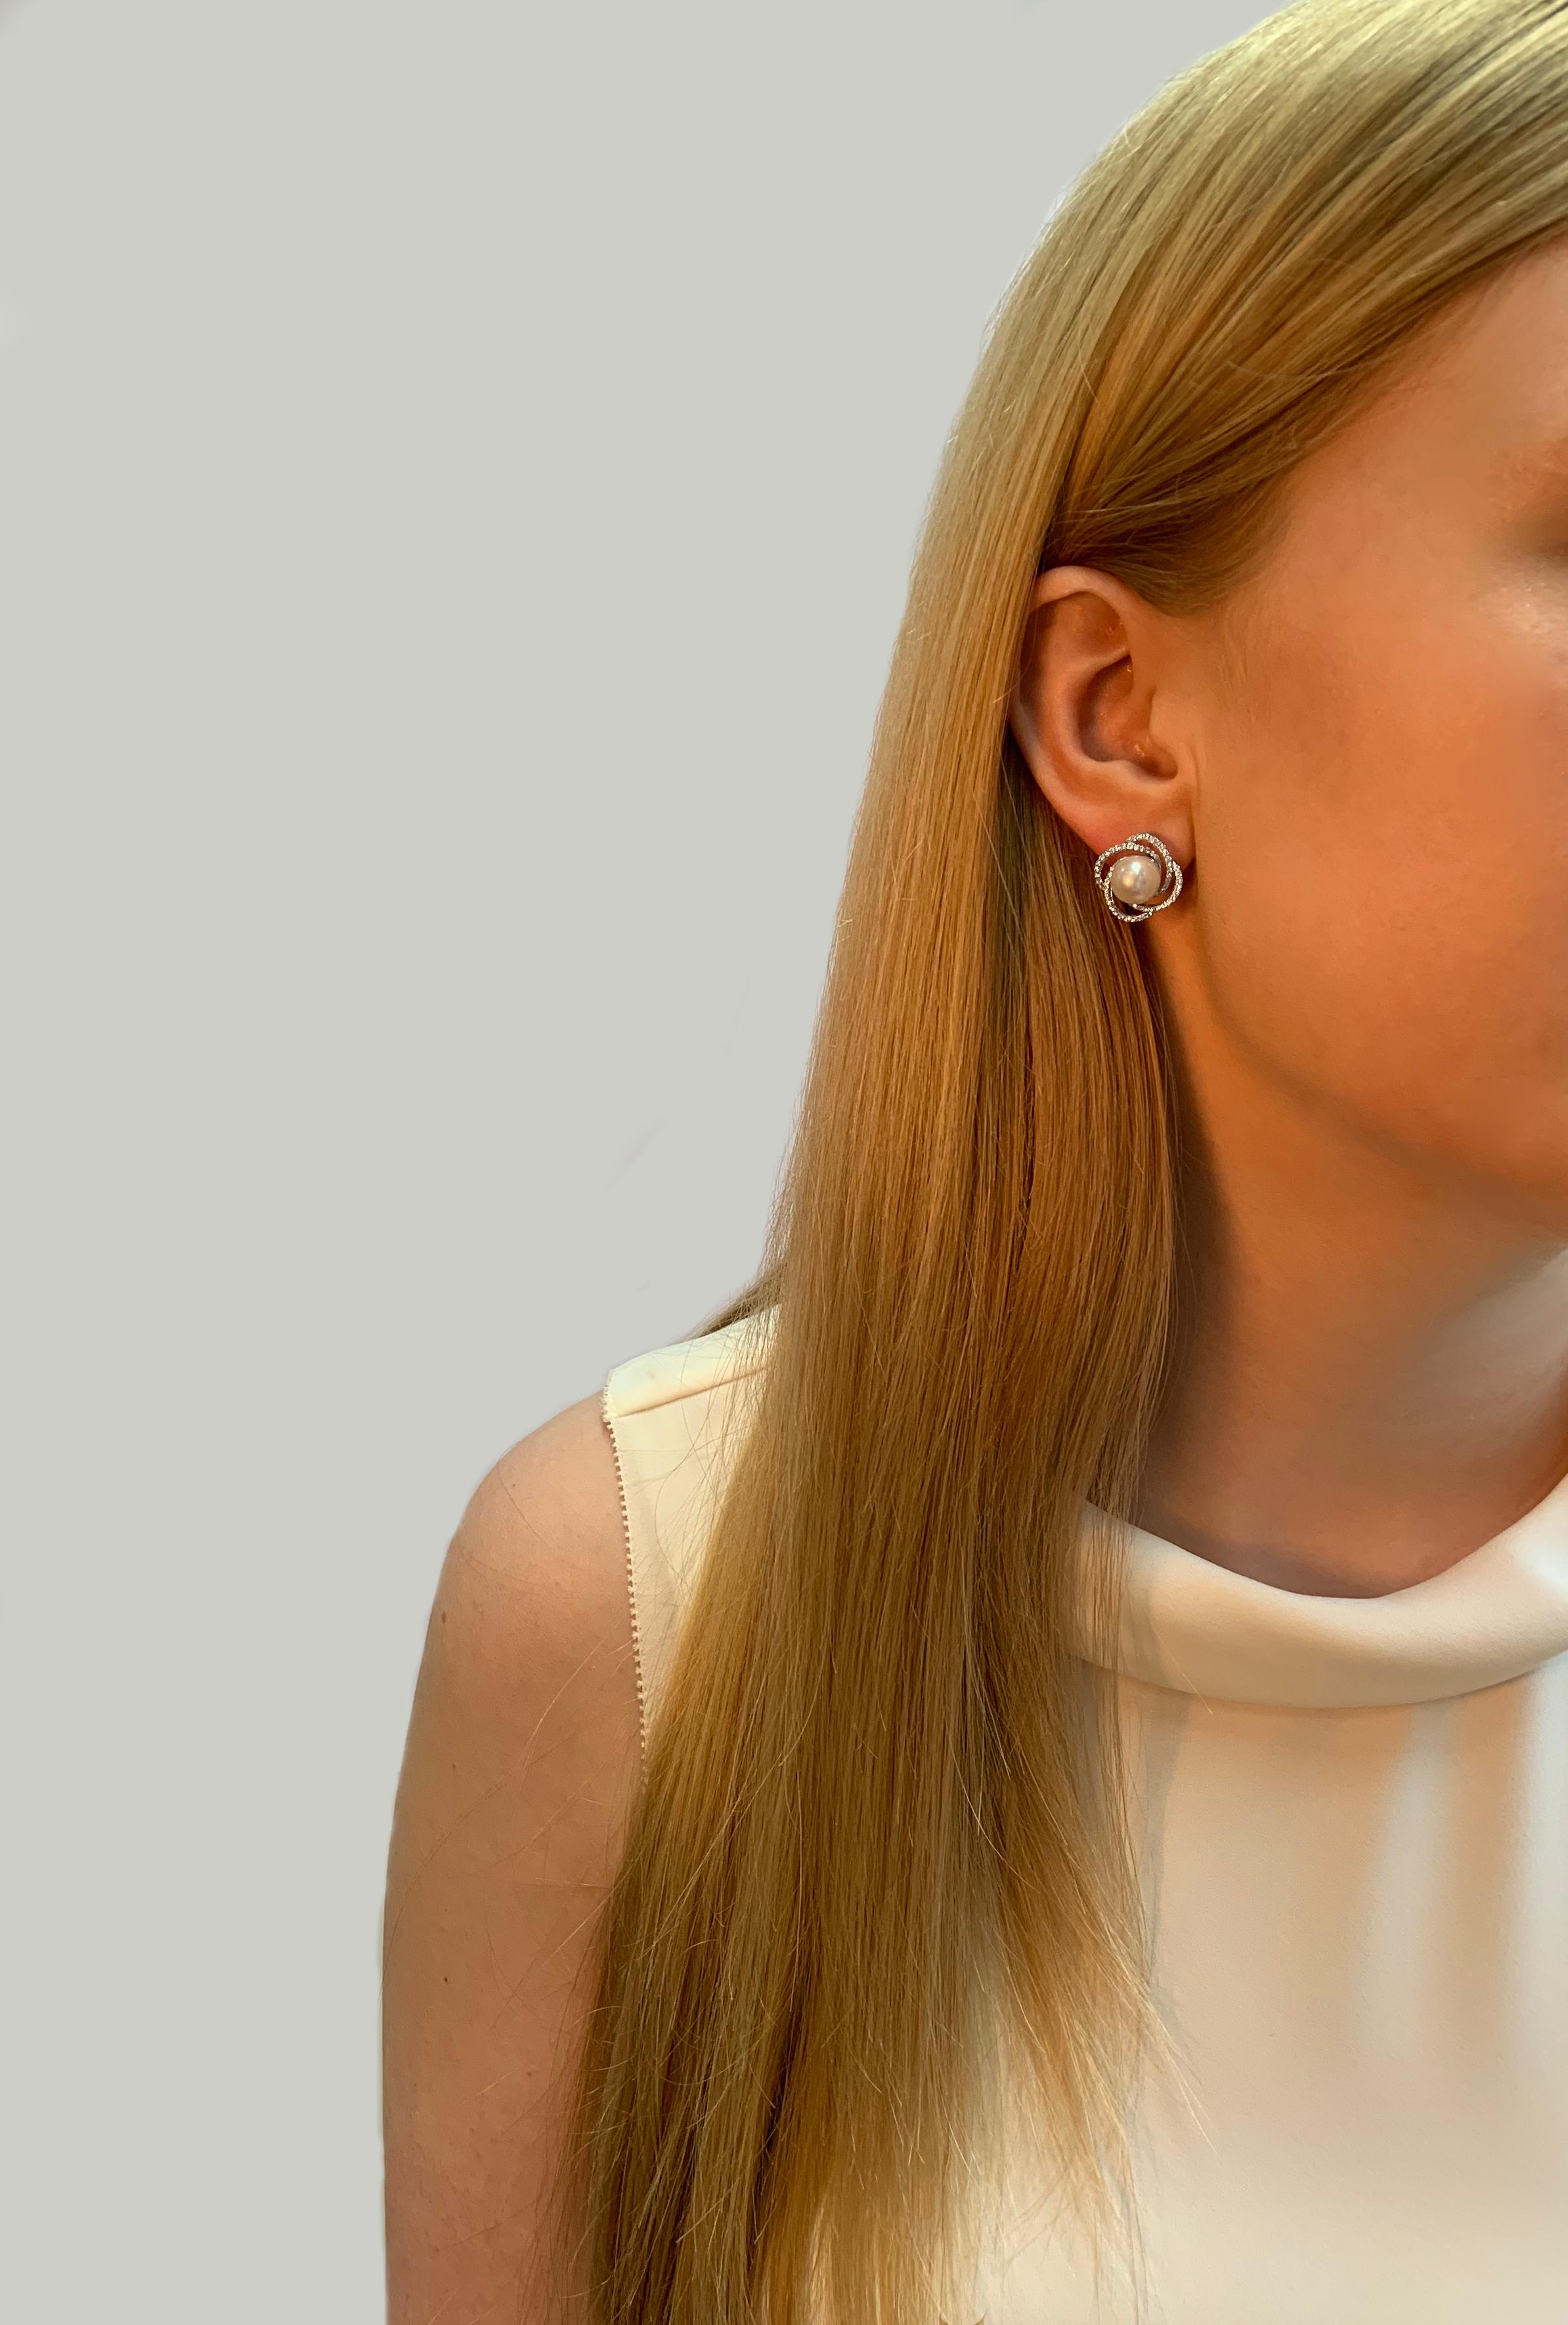 Modern Yoko London Freshwater Pearl and Diamond Earrings Set in 18 Karat White Gold